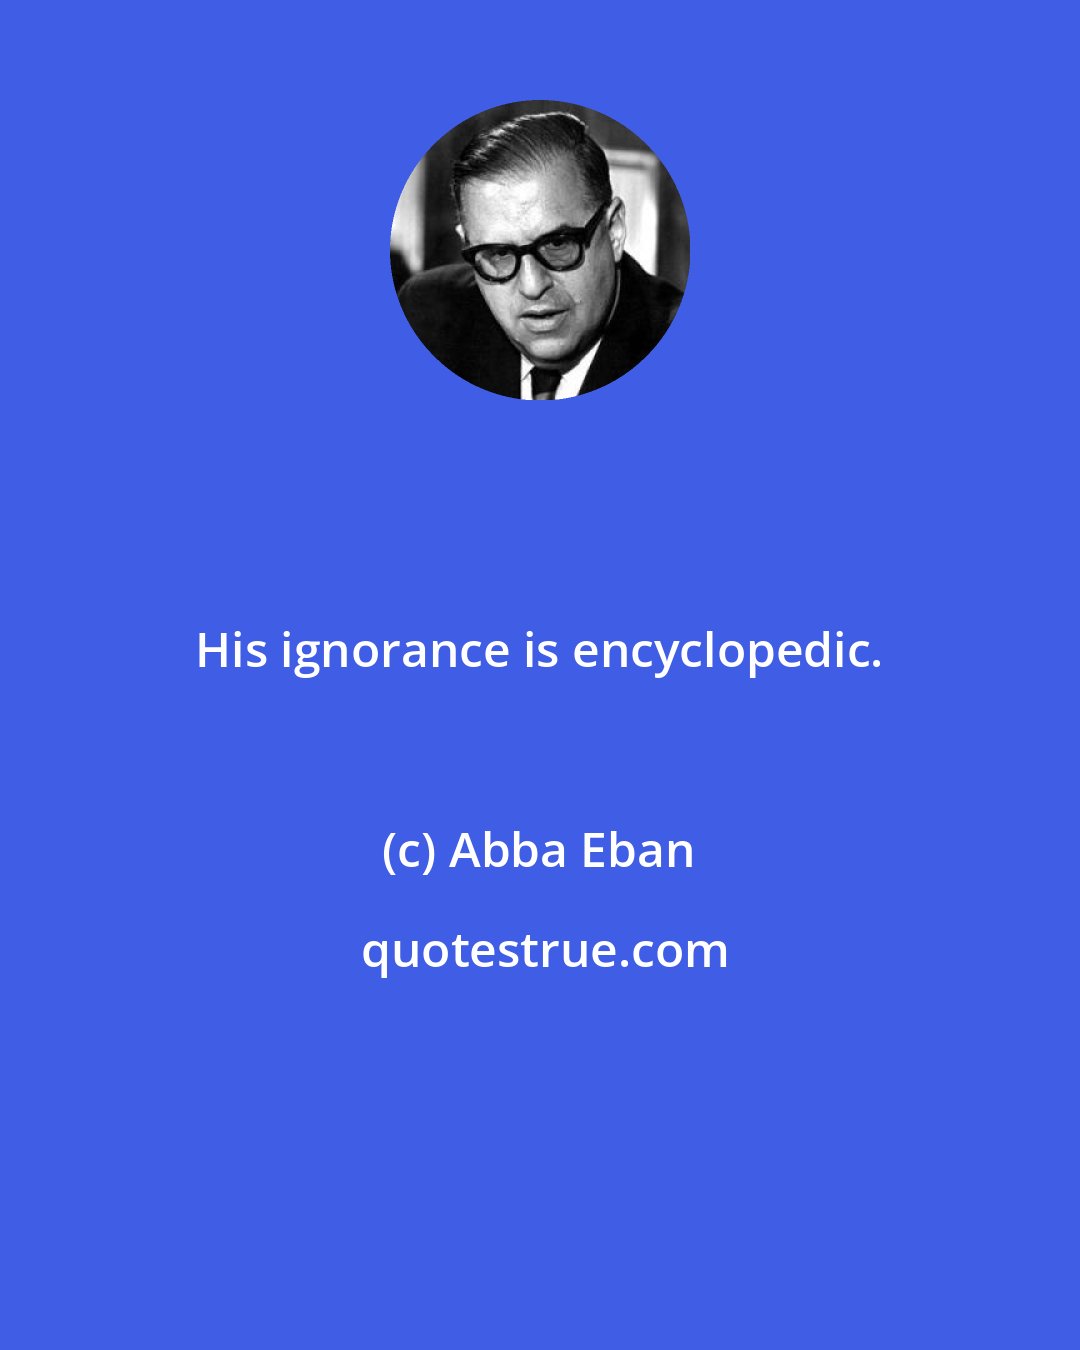 Abba Eban: His ignorance is encyclopedic.